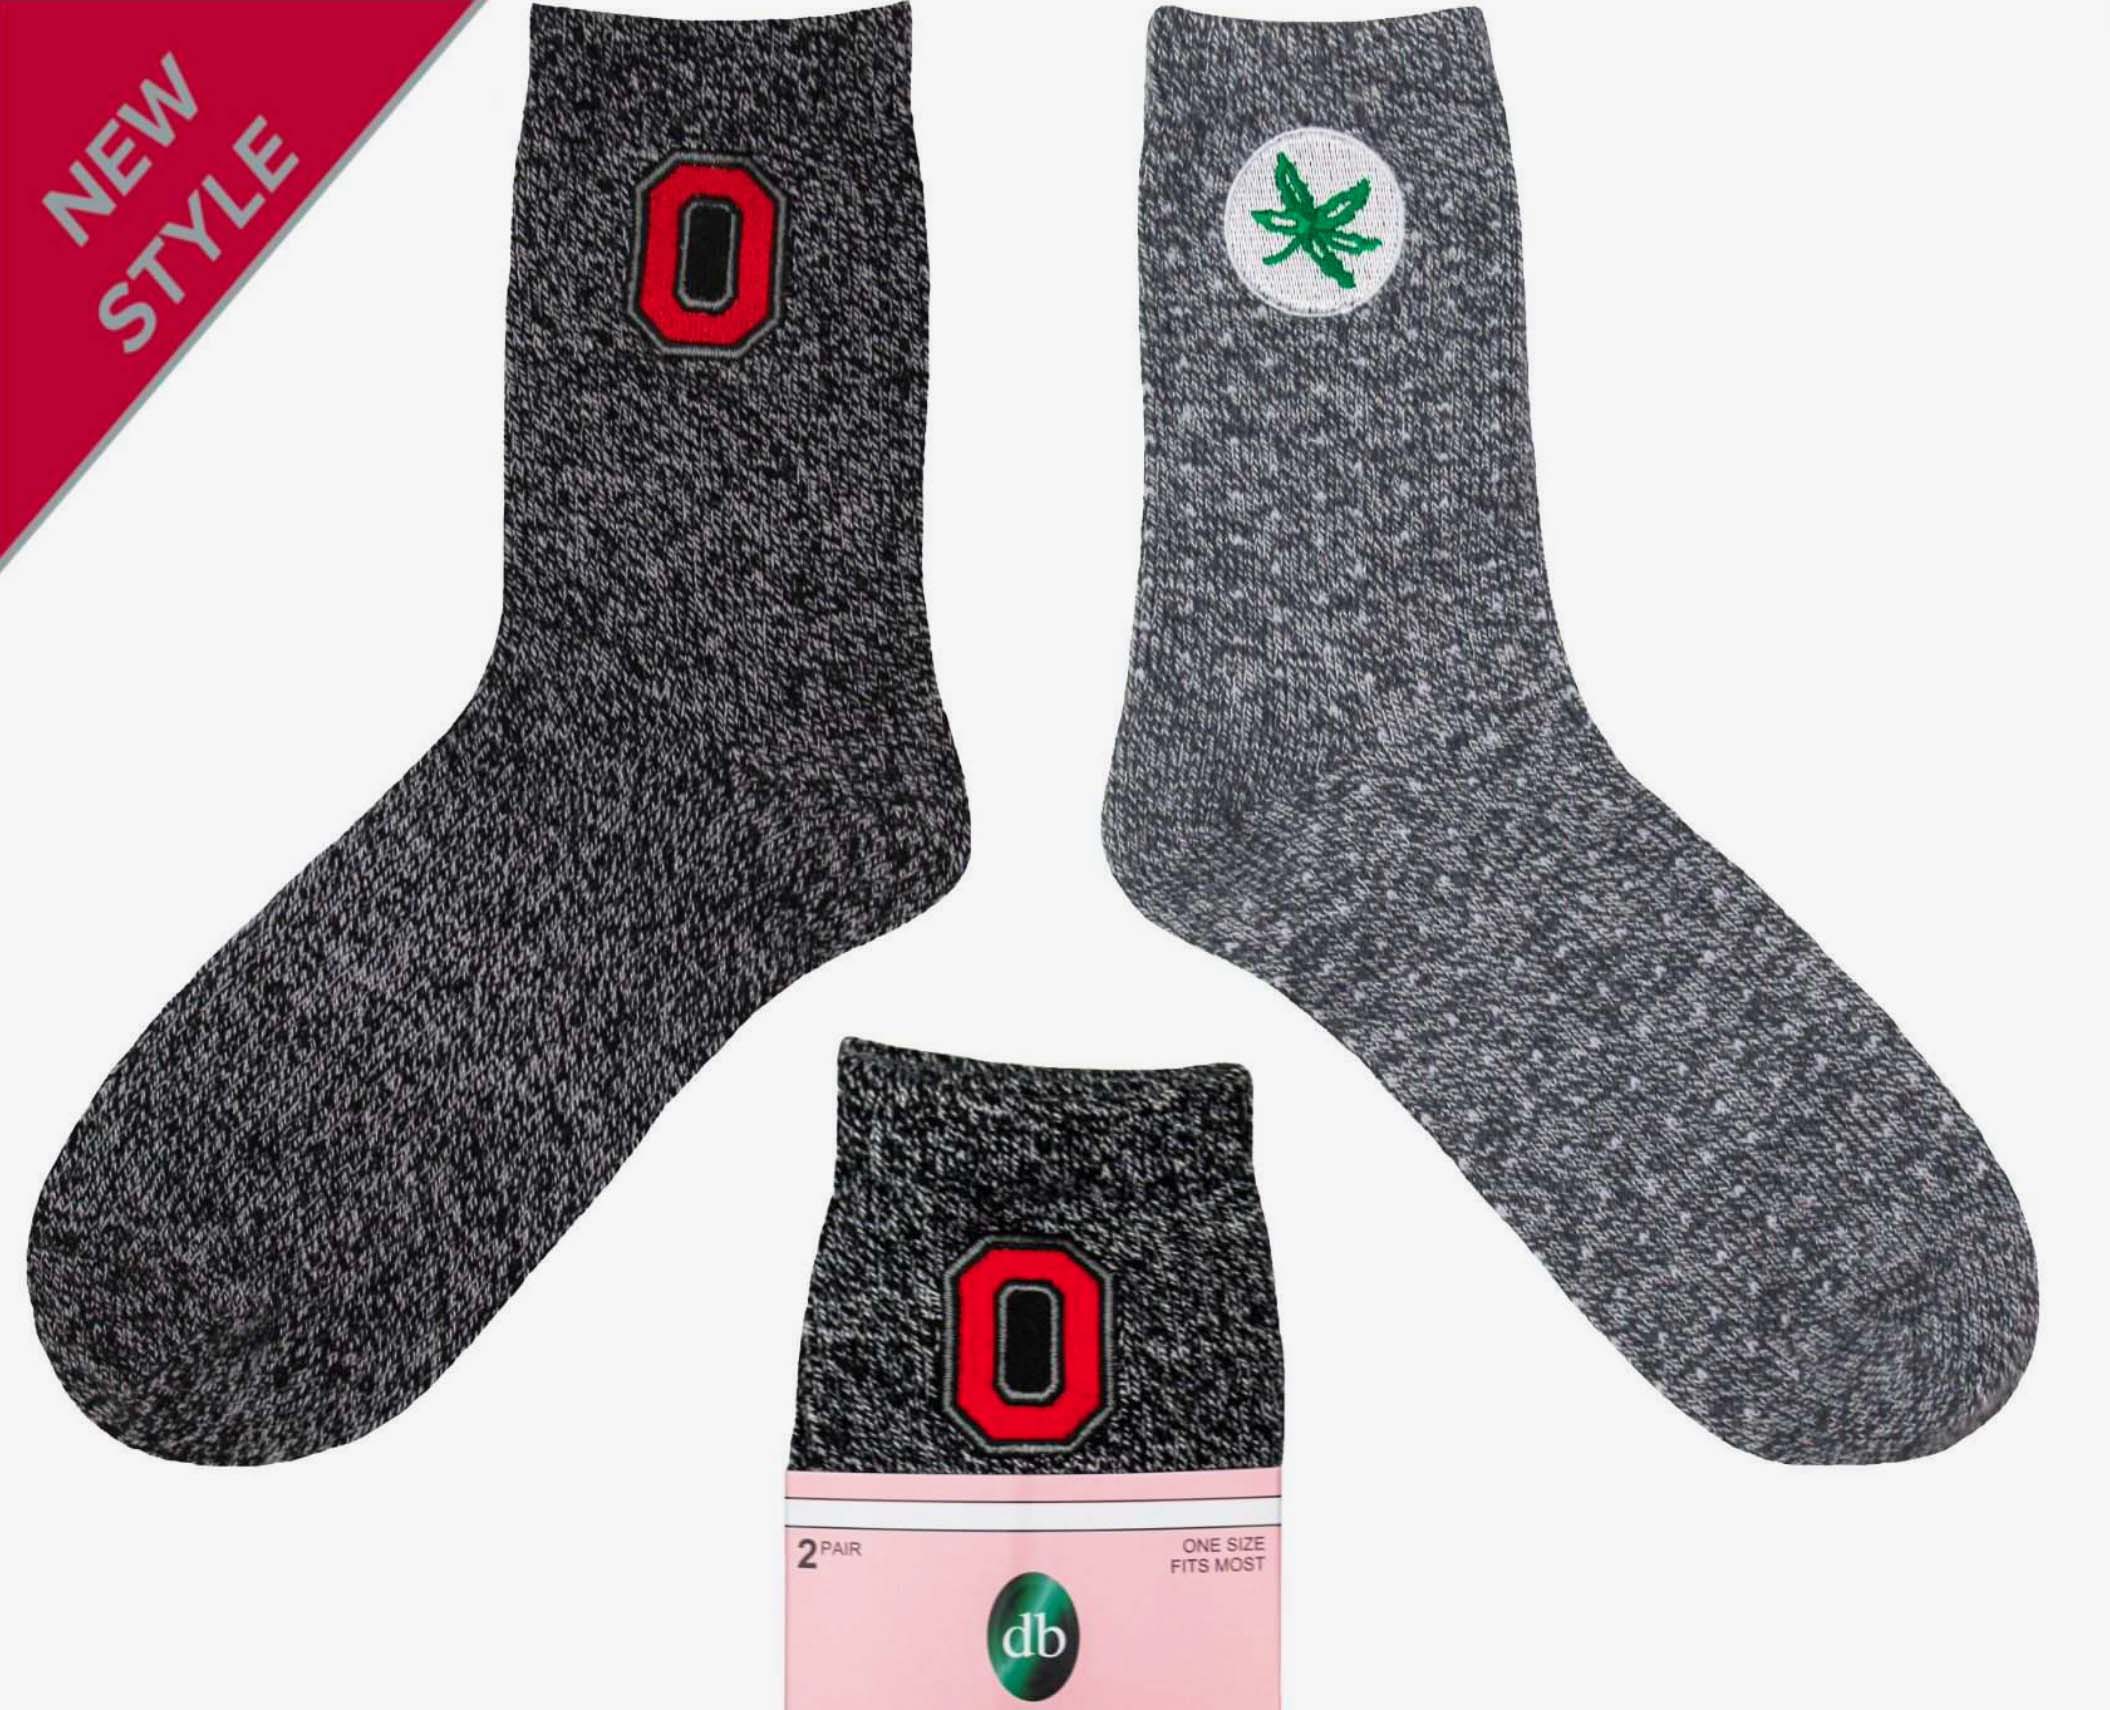 Ohio State's Women's Lounge Socks